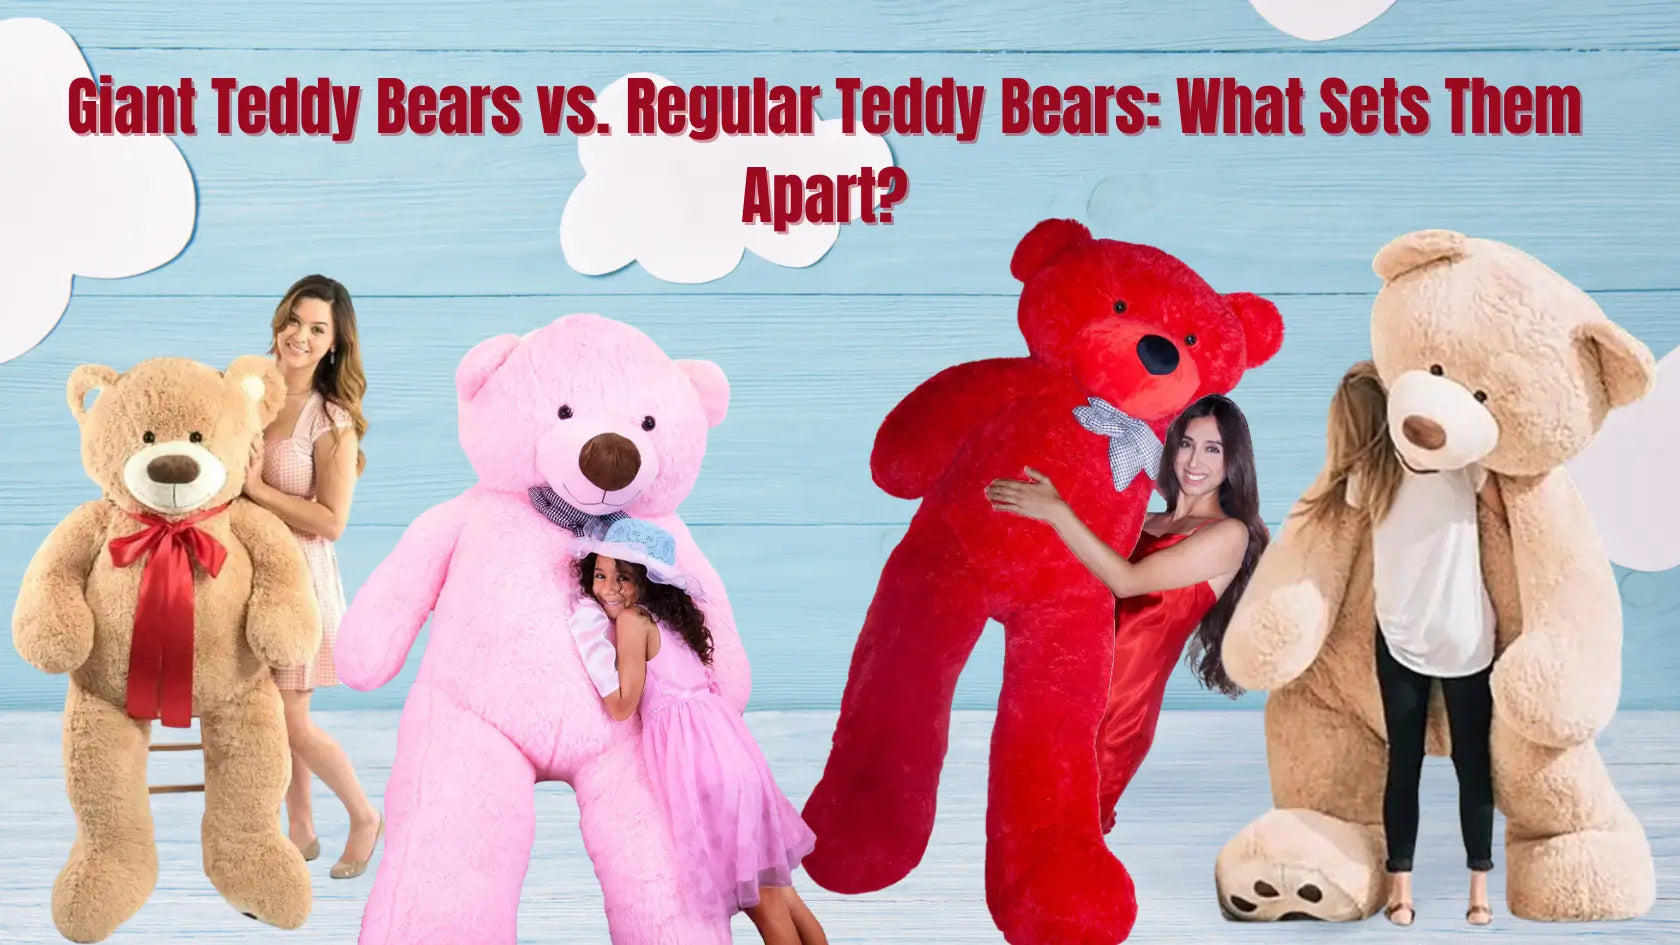 Giant Teddy Bears vs. Regular Teddy Bears: What Sets Them Apart?